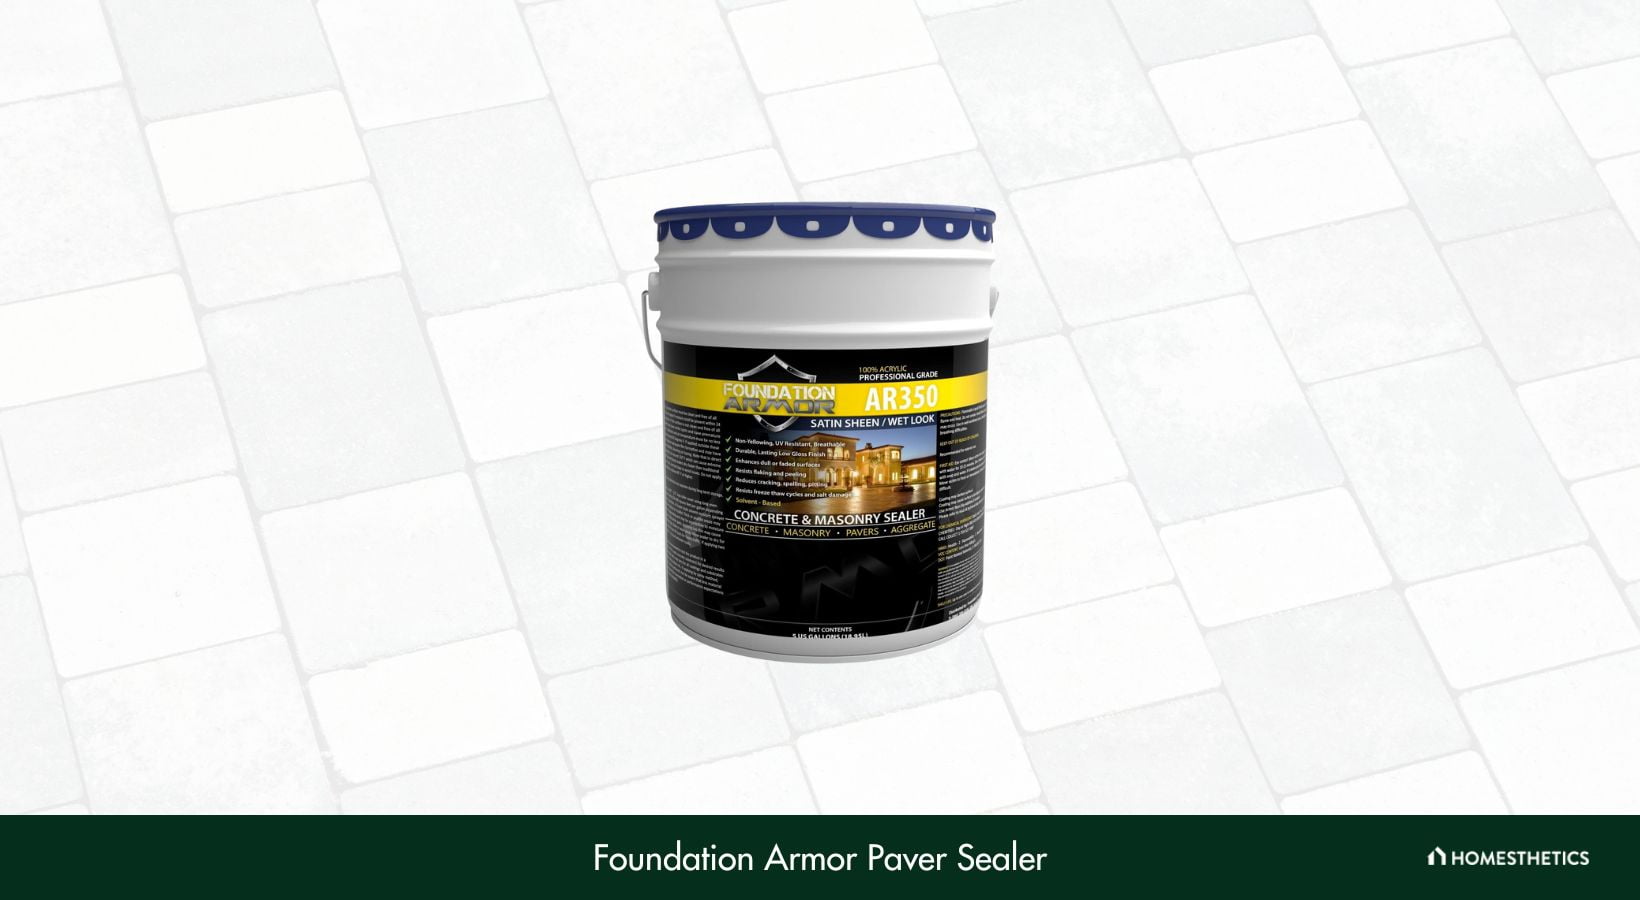 Foundation Armor Paver Sealer